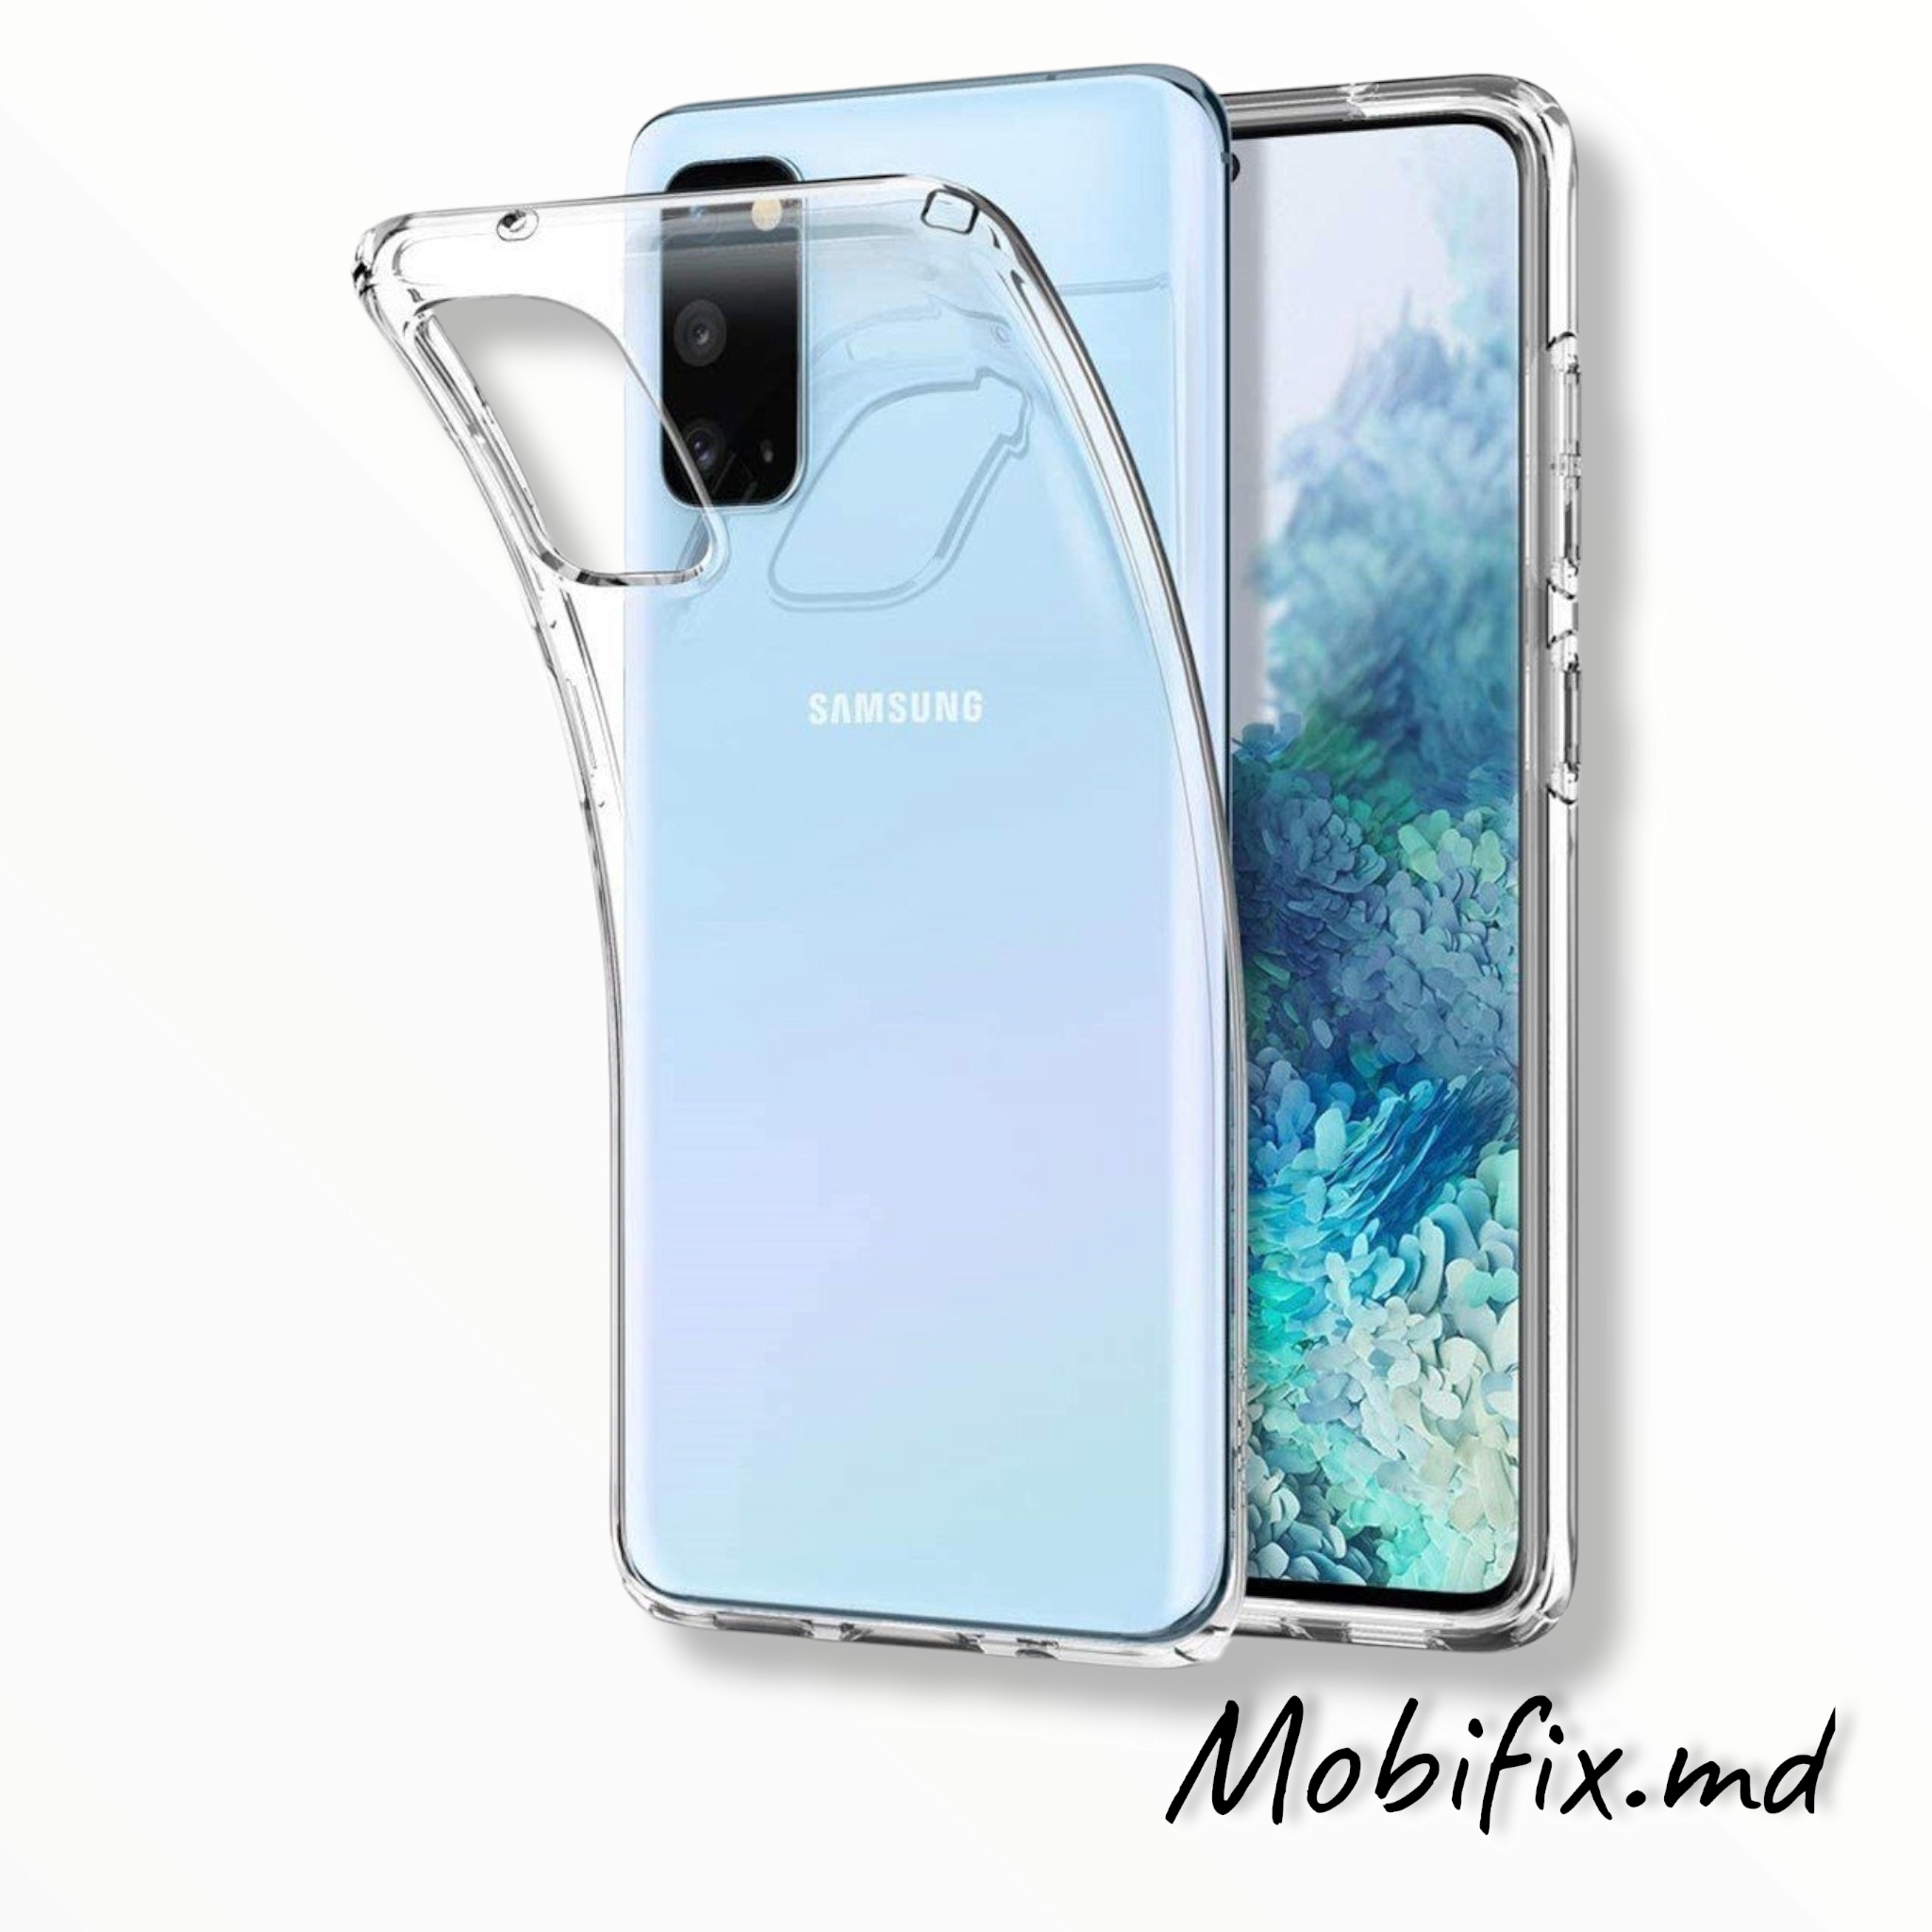 Аксессуары для самсунг галакси. Samsung Galaxy 21 transparent Case. Samsung Galaxy s21 transparent Case. Samsung Galaxy s20 Fe. Чехол на самсунг галакси а20s.